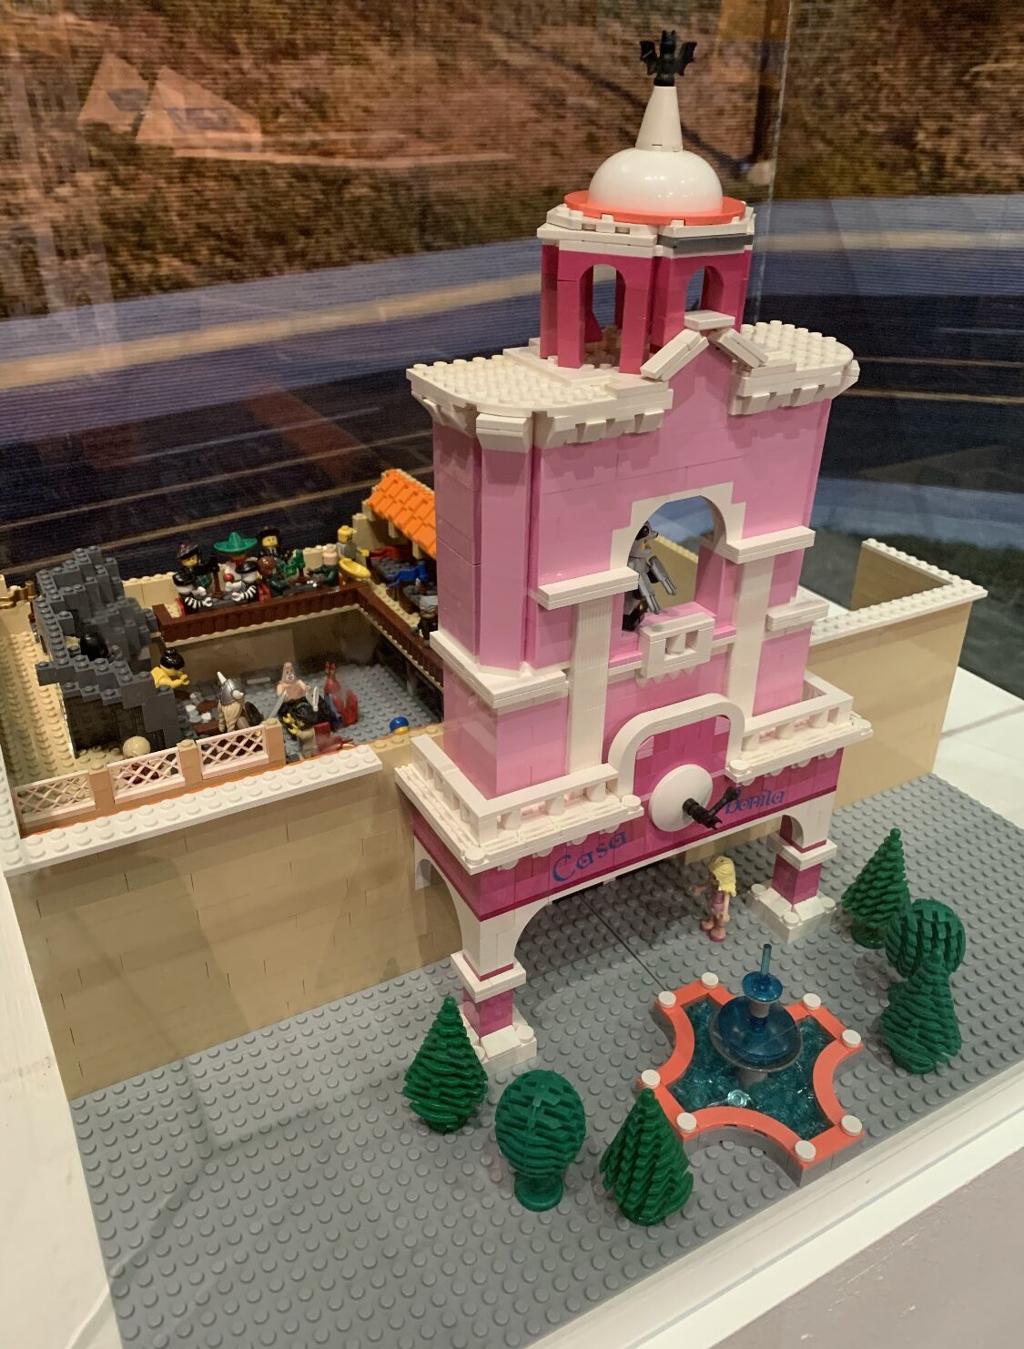 Casa Bonita replica built with thousands of pink Lego bricks, Lifestyle